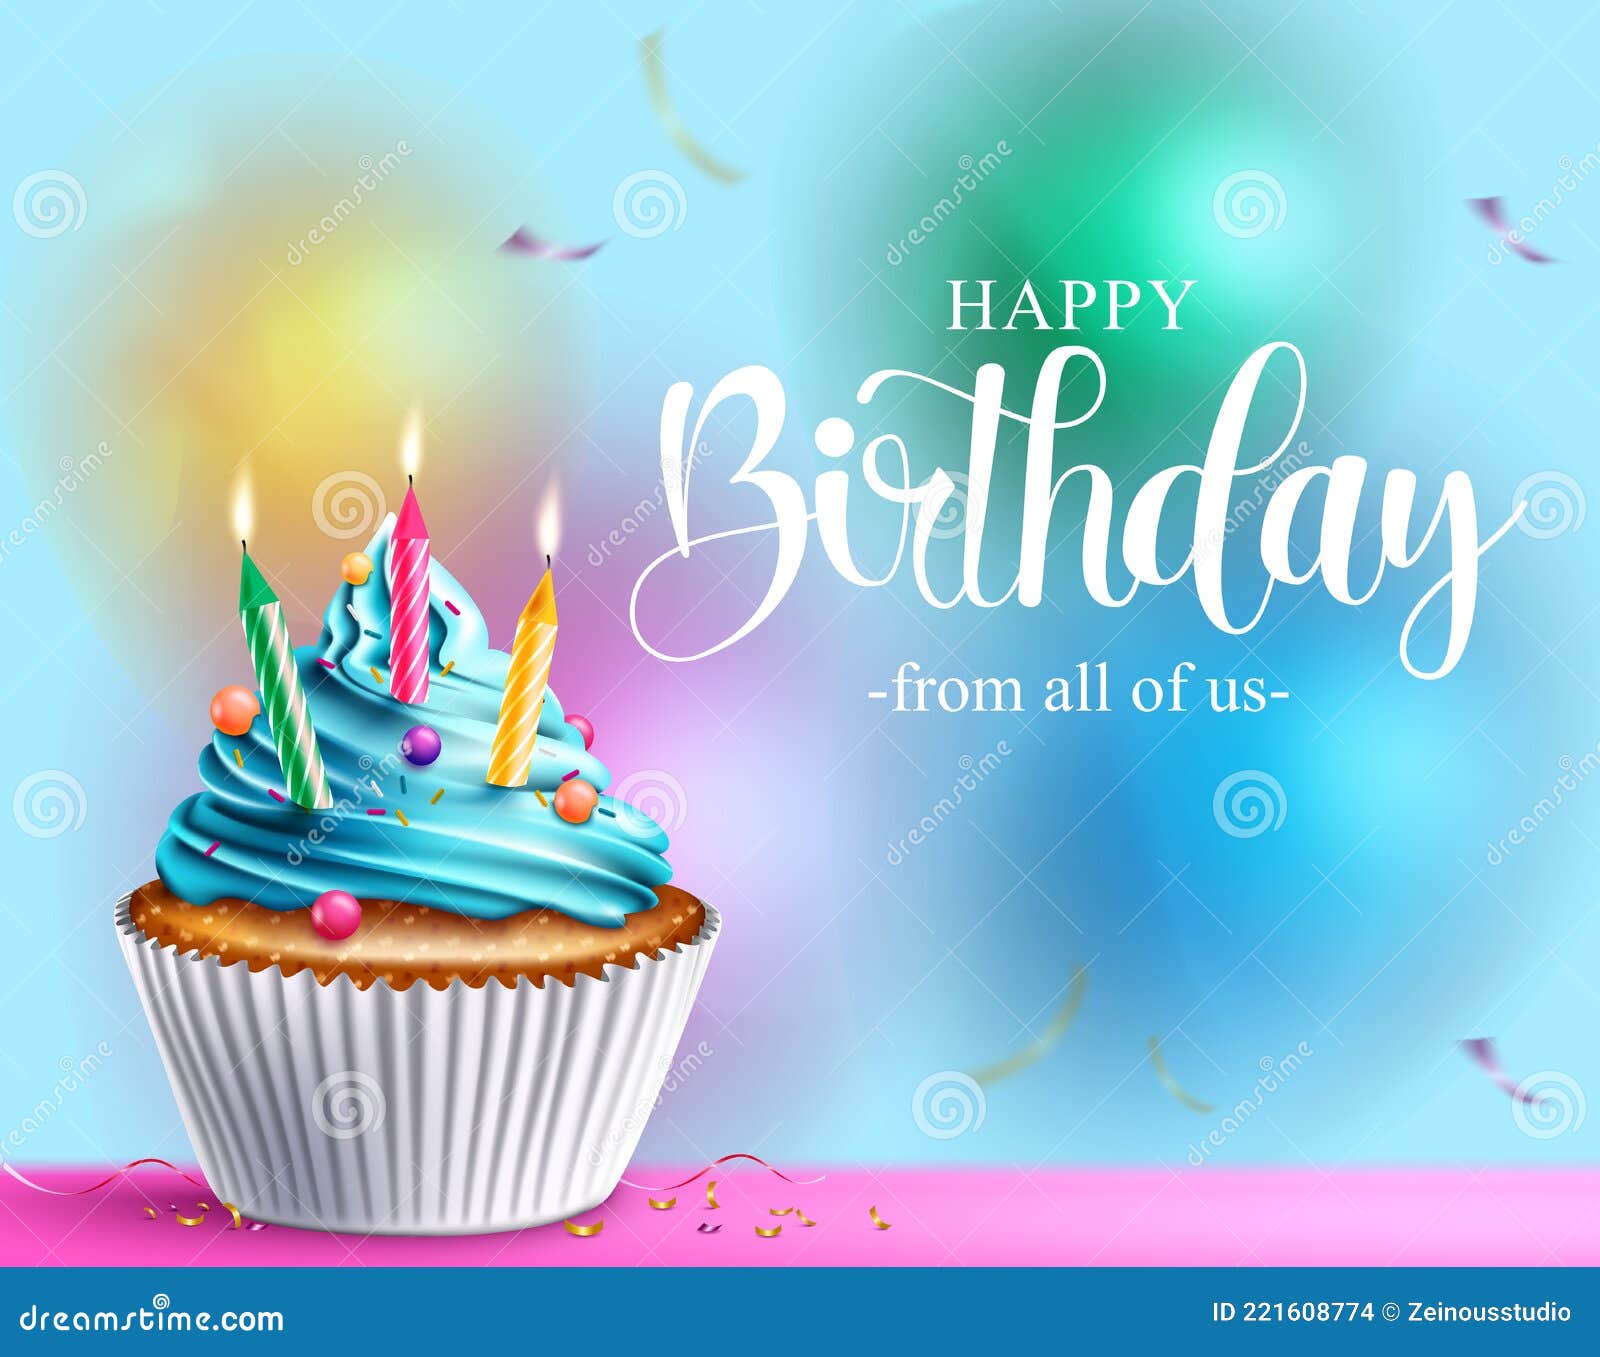 Birthday Cupcake Vector Design. Happy Birthday Text with Cupcake ...